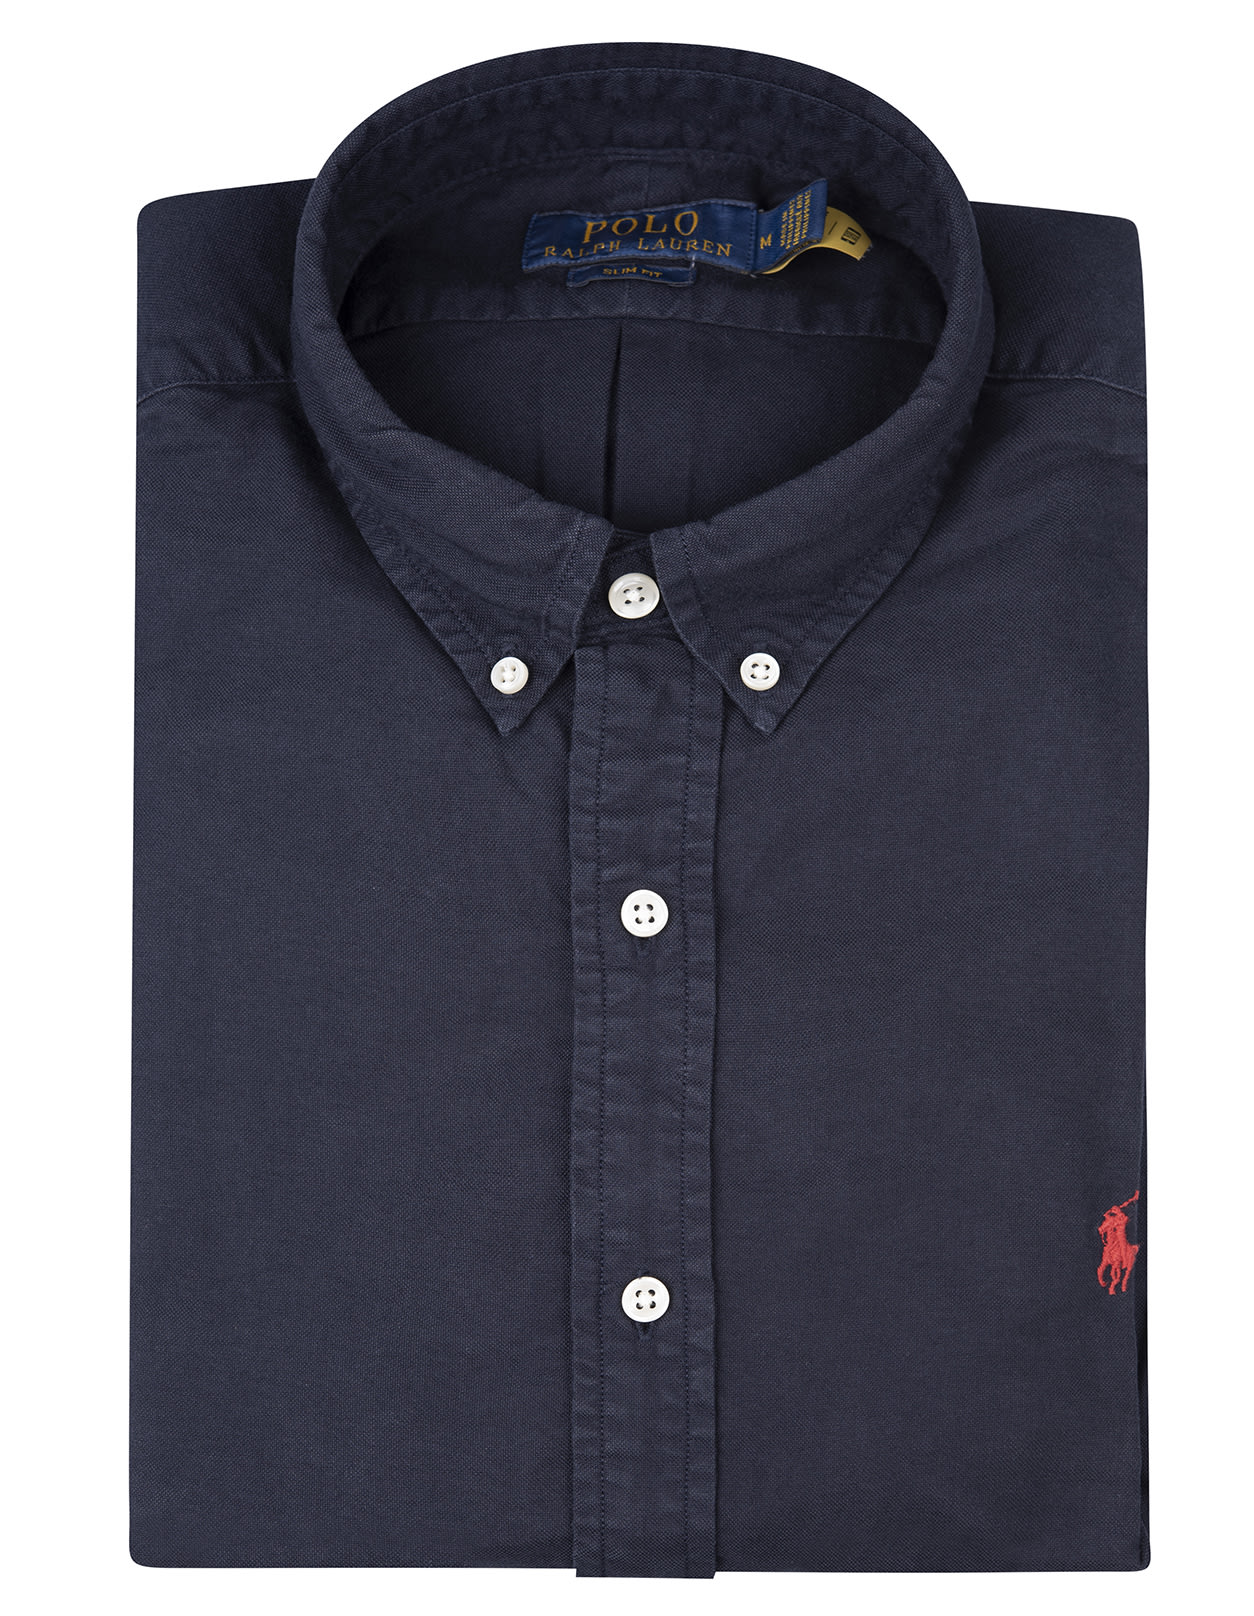 Ralph Lauren Man Navy Blue Slim Fit Oxford Shirt With Contrast Pony